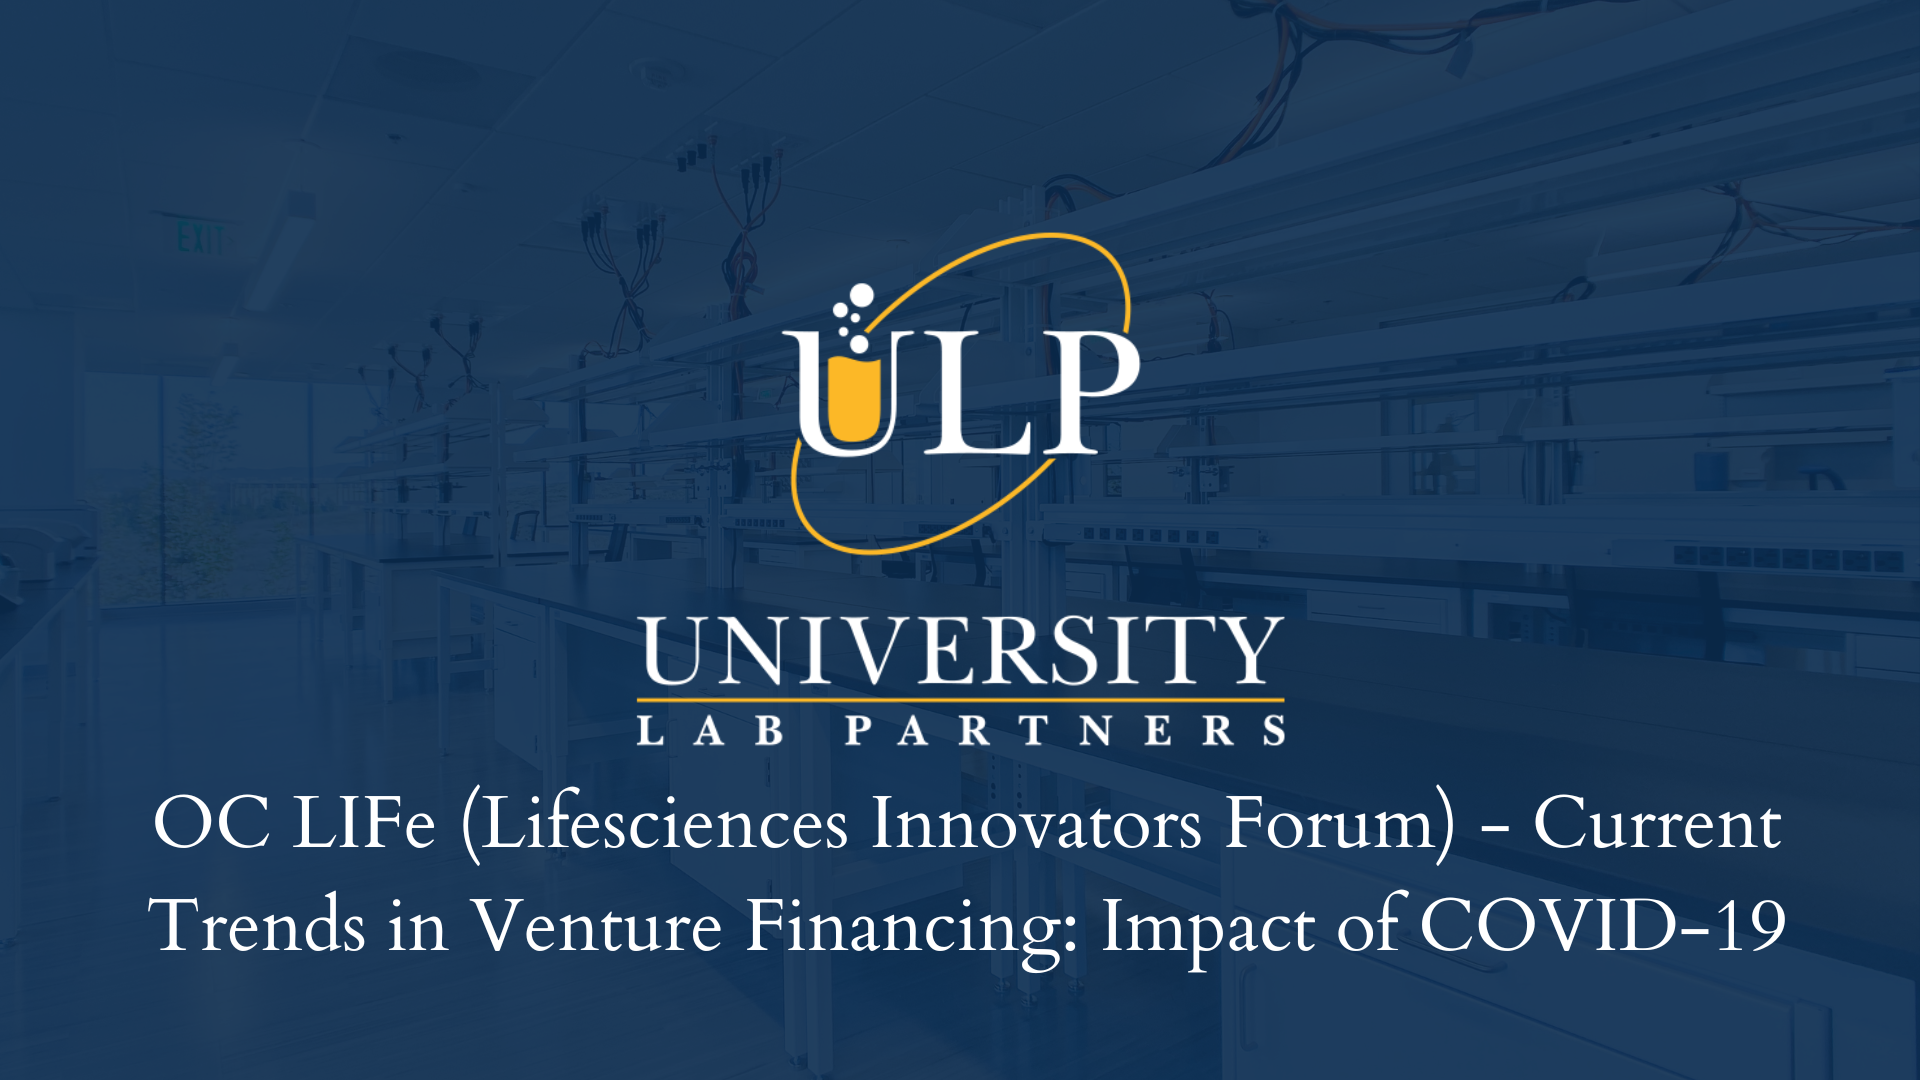 OC LIFe (Lifesciences Innovators Forum) - Current Trends in Venture Financing: Impact of COVID-19